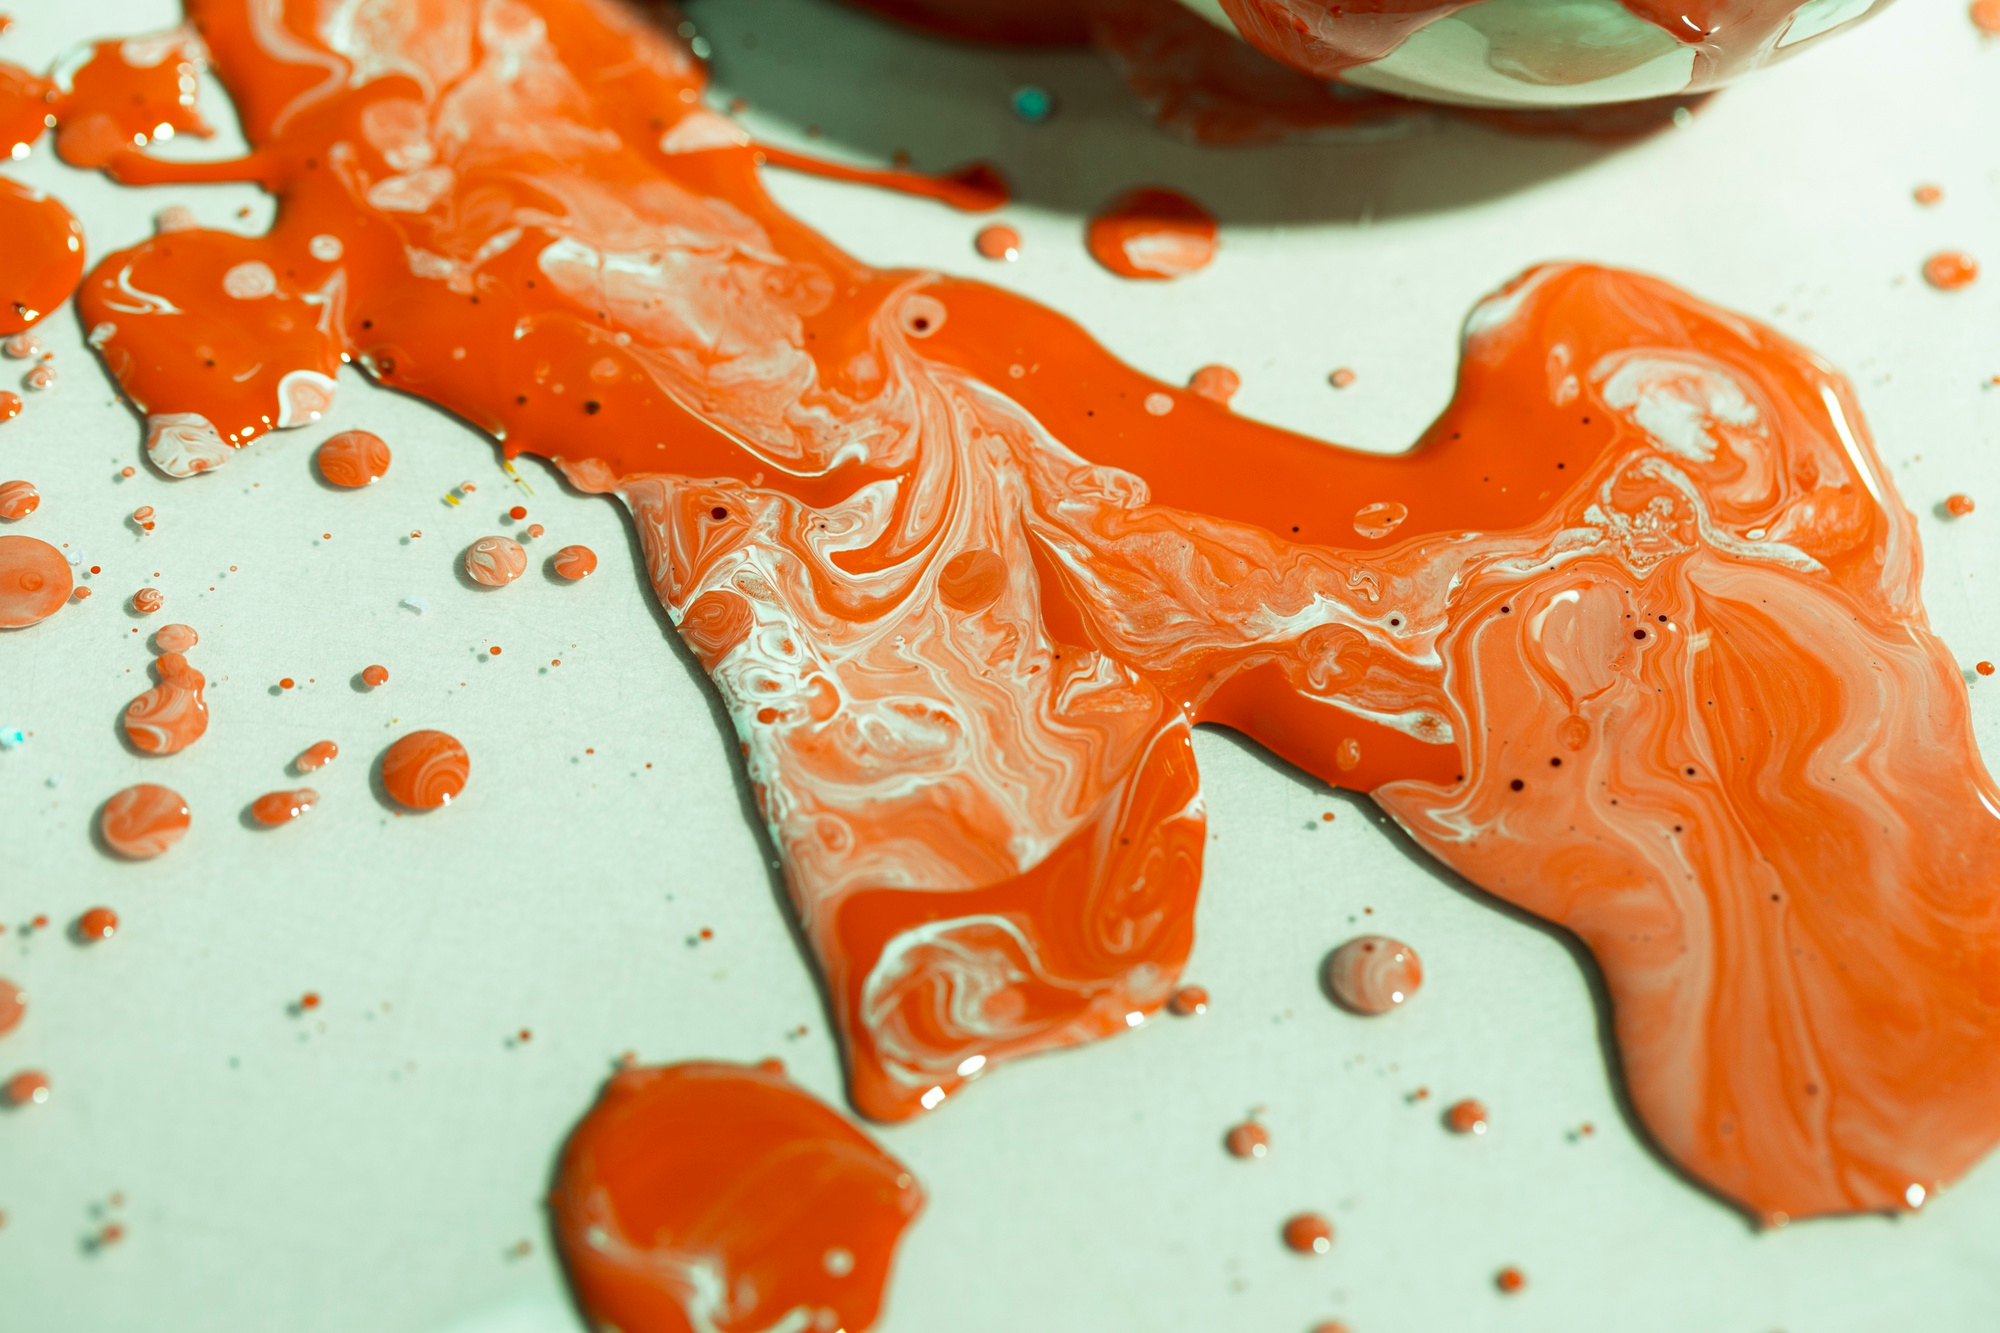 Sauce spilled on a surface | Source: Freepik